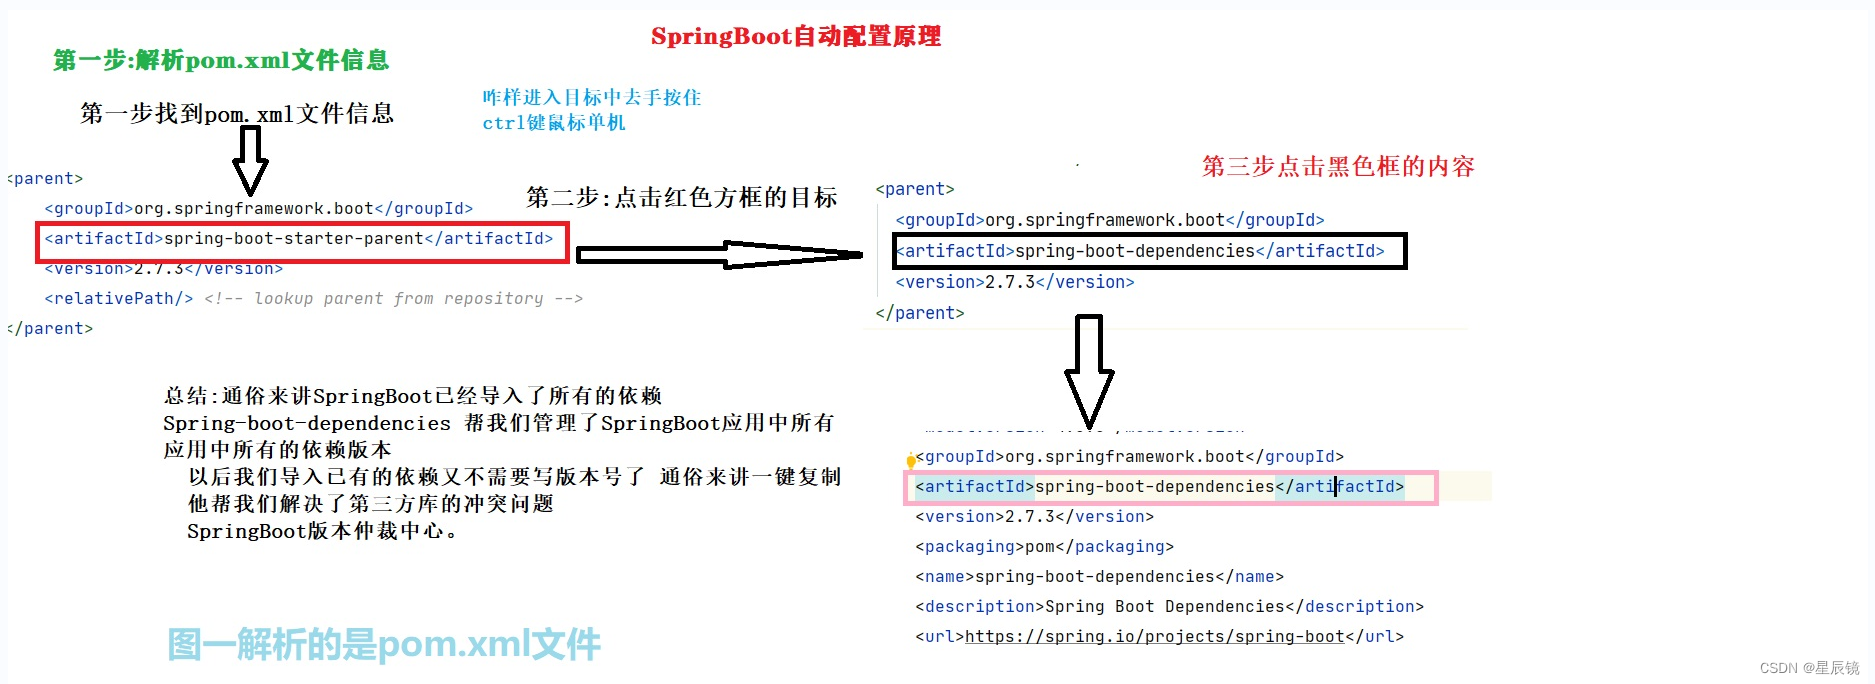 SpringBoot自动配置原理:解析Pom.xml文件《第五课》